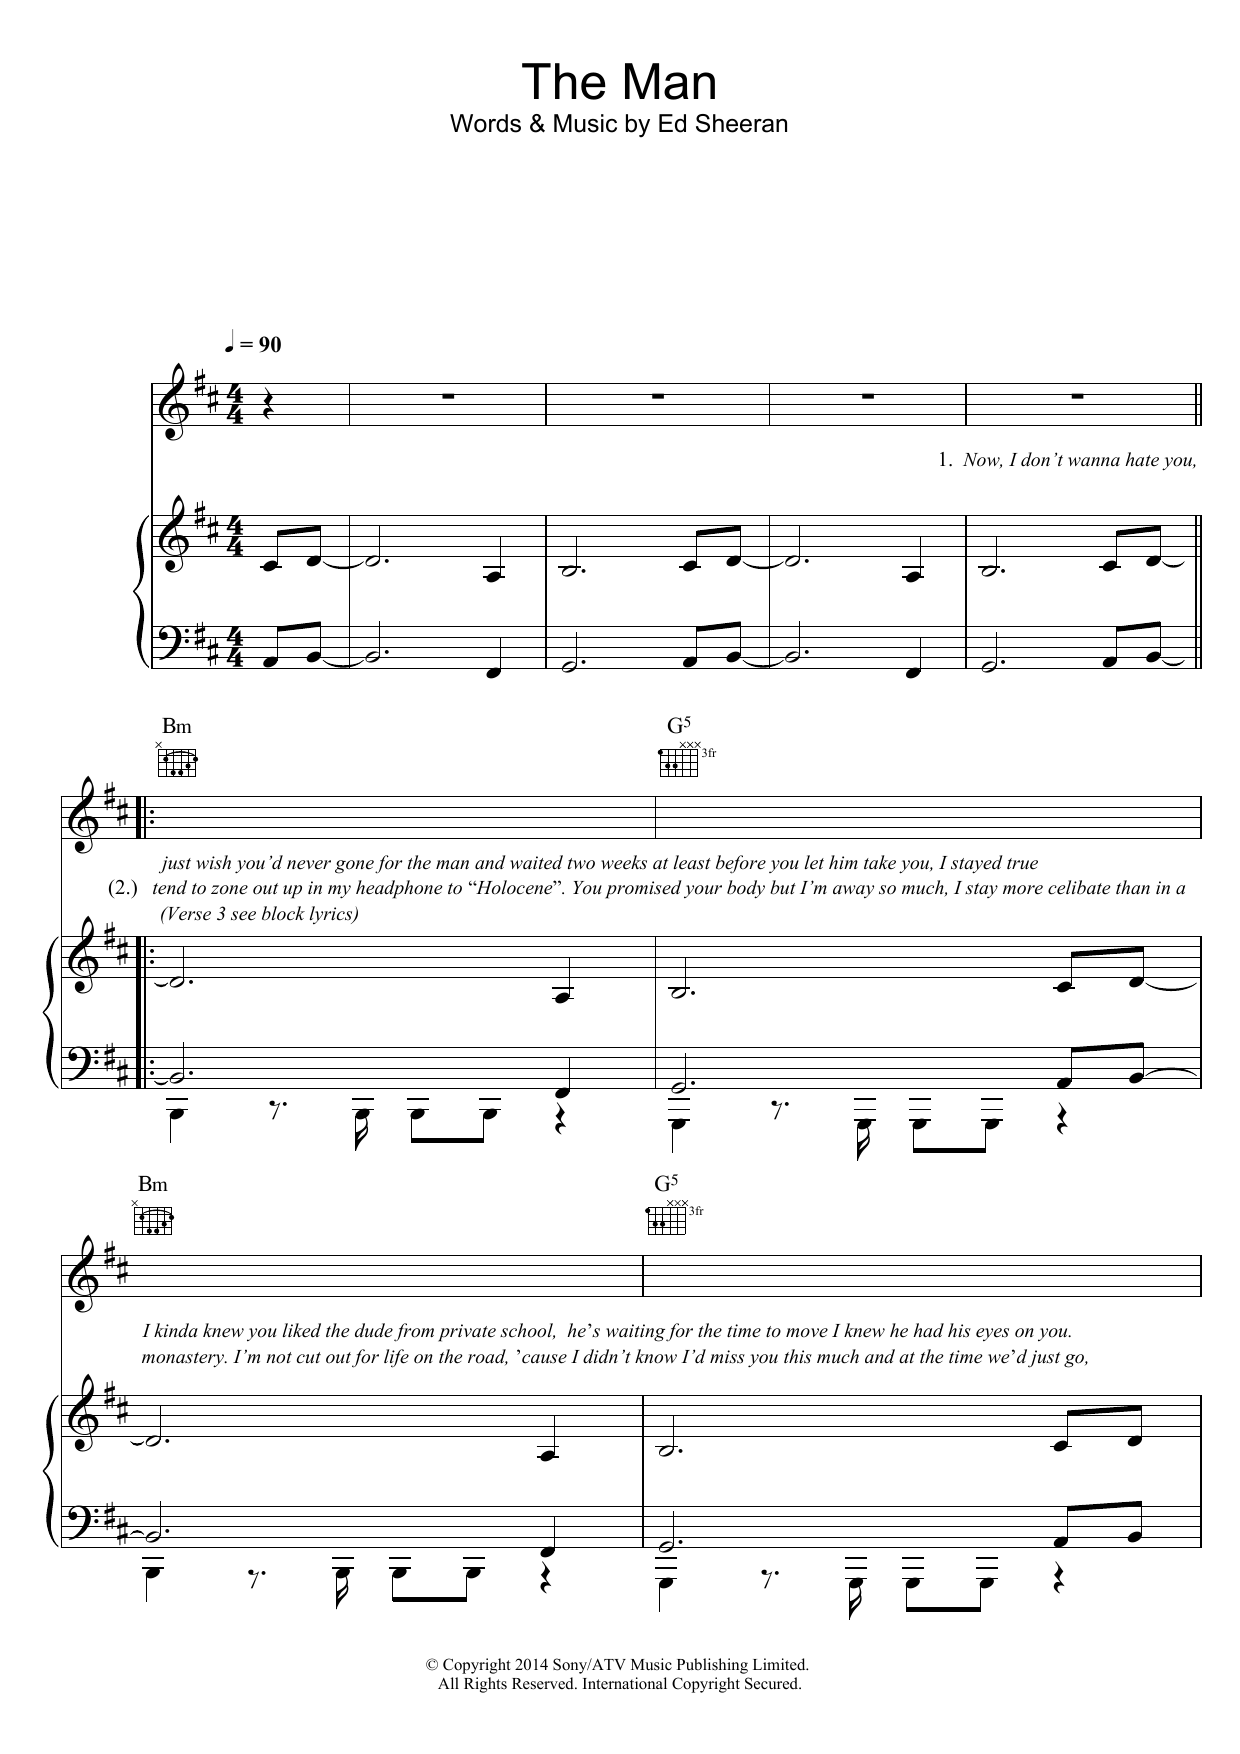 Ed Sheeran The Man Sheet Music Notes & Chords for Piano, Vocal & Guitar (Right-Hand Melody) - Download or Print PDF